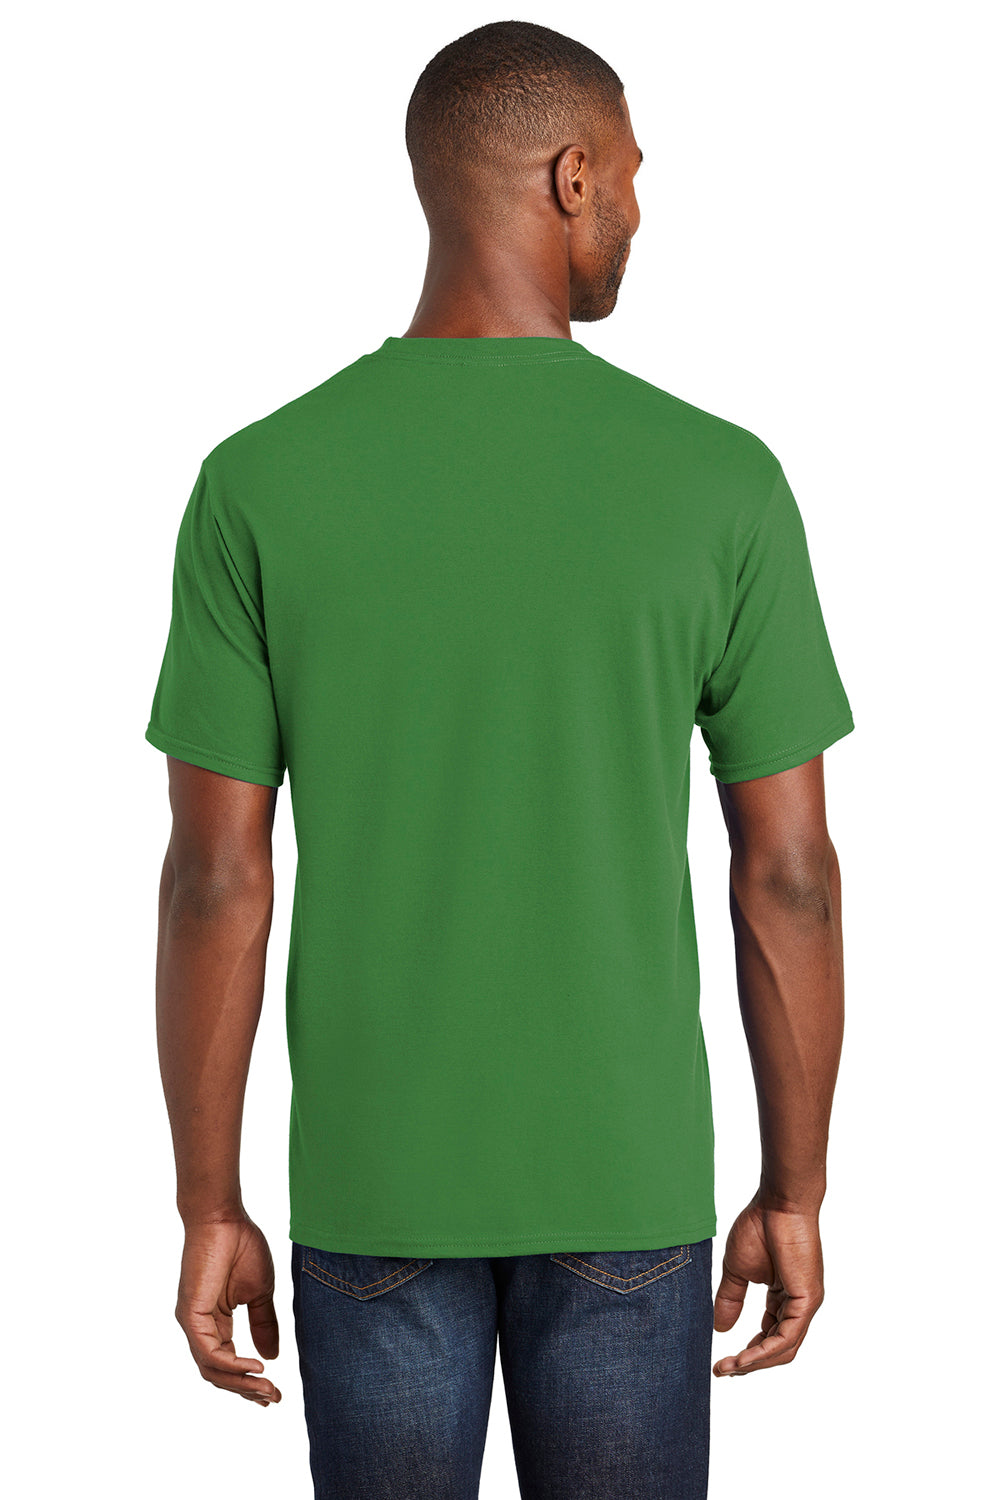 Port & Company PC450 Mens Fan Favorite Short Sleeve Crewneck T-Shirt Kiwi Green Back